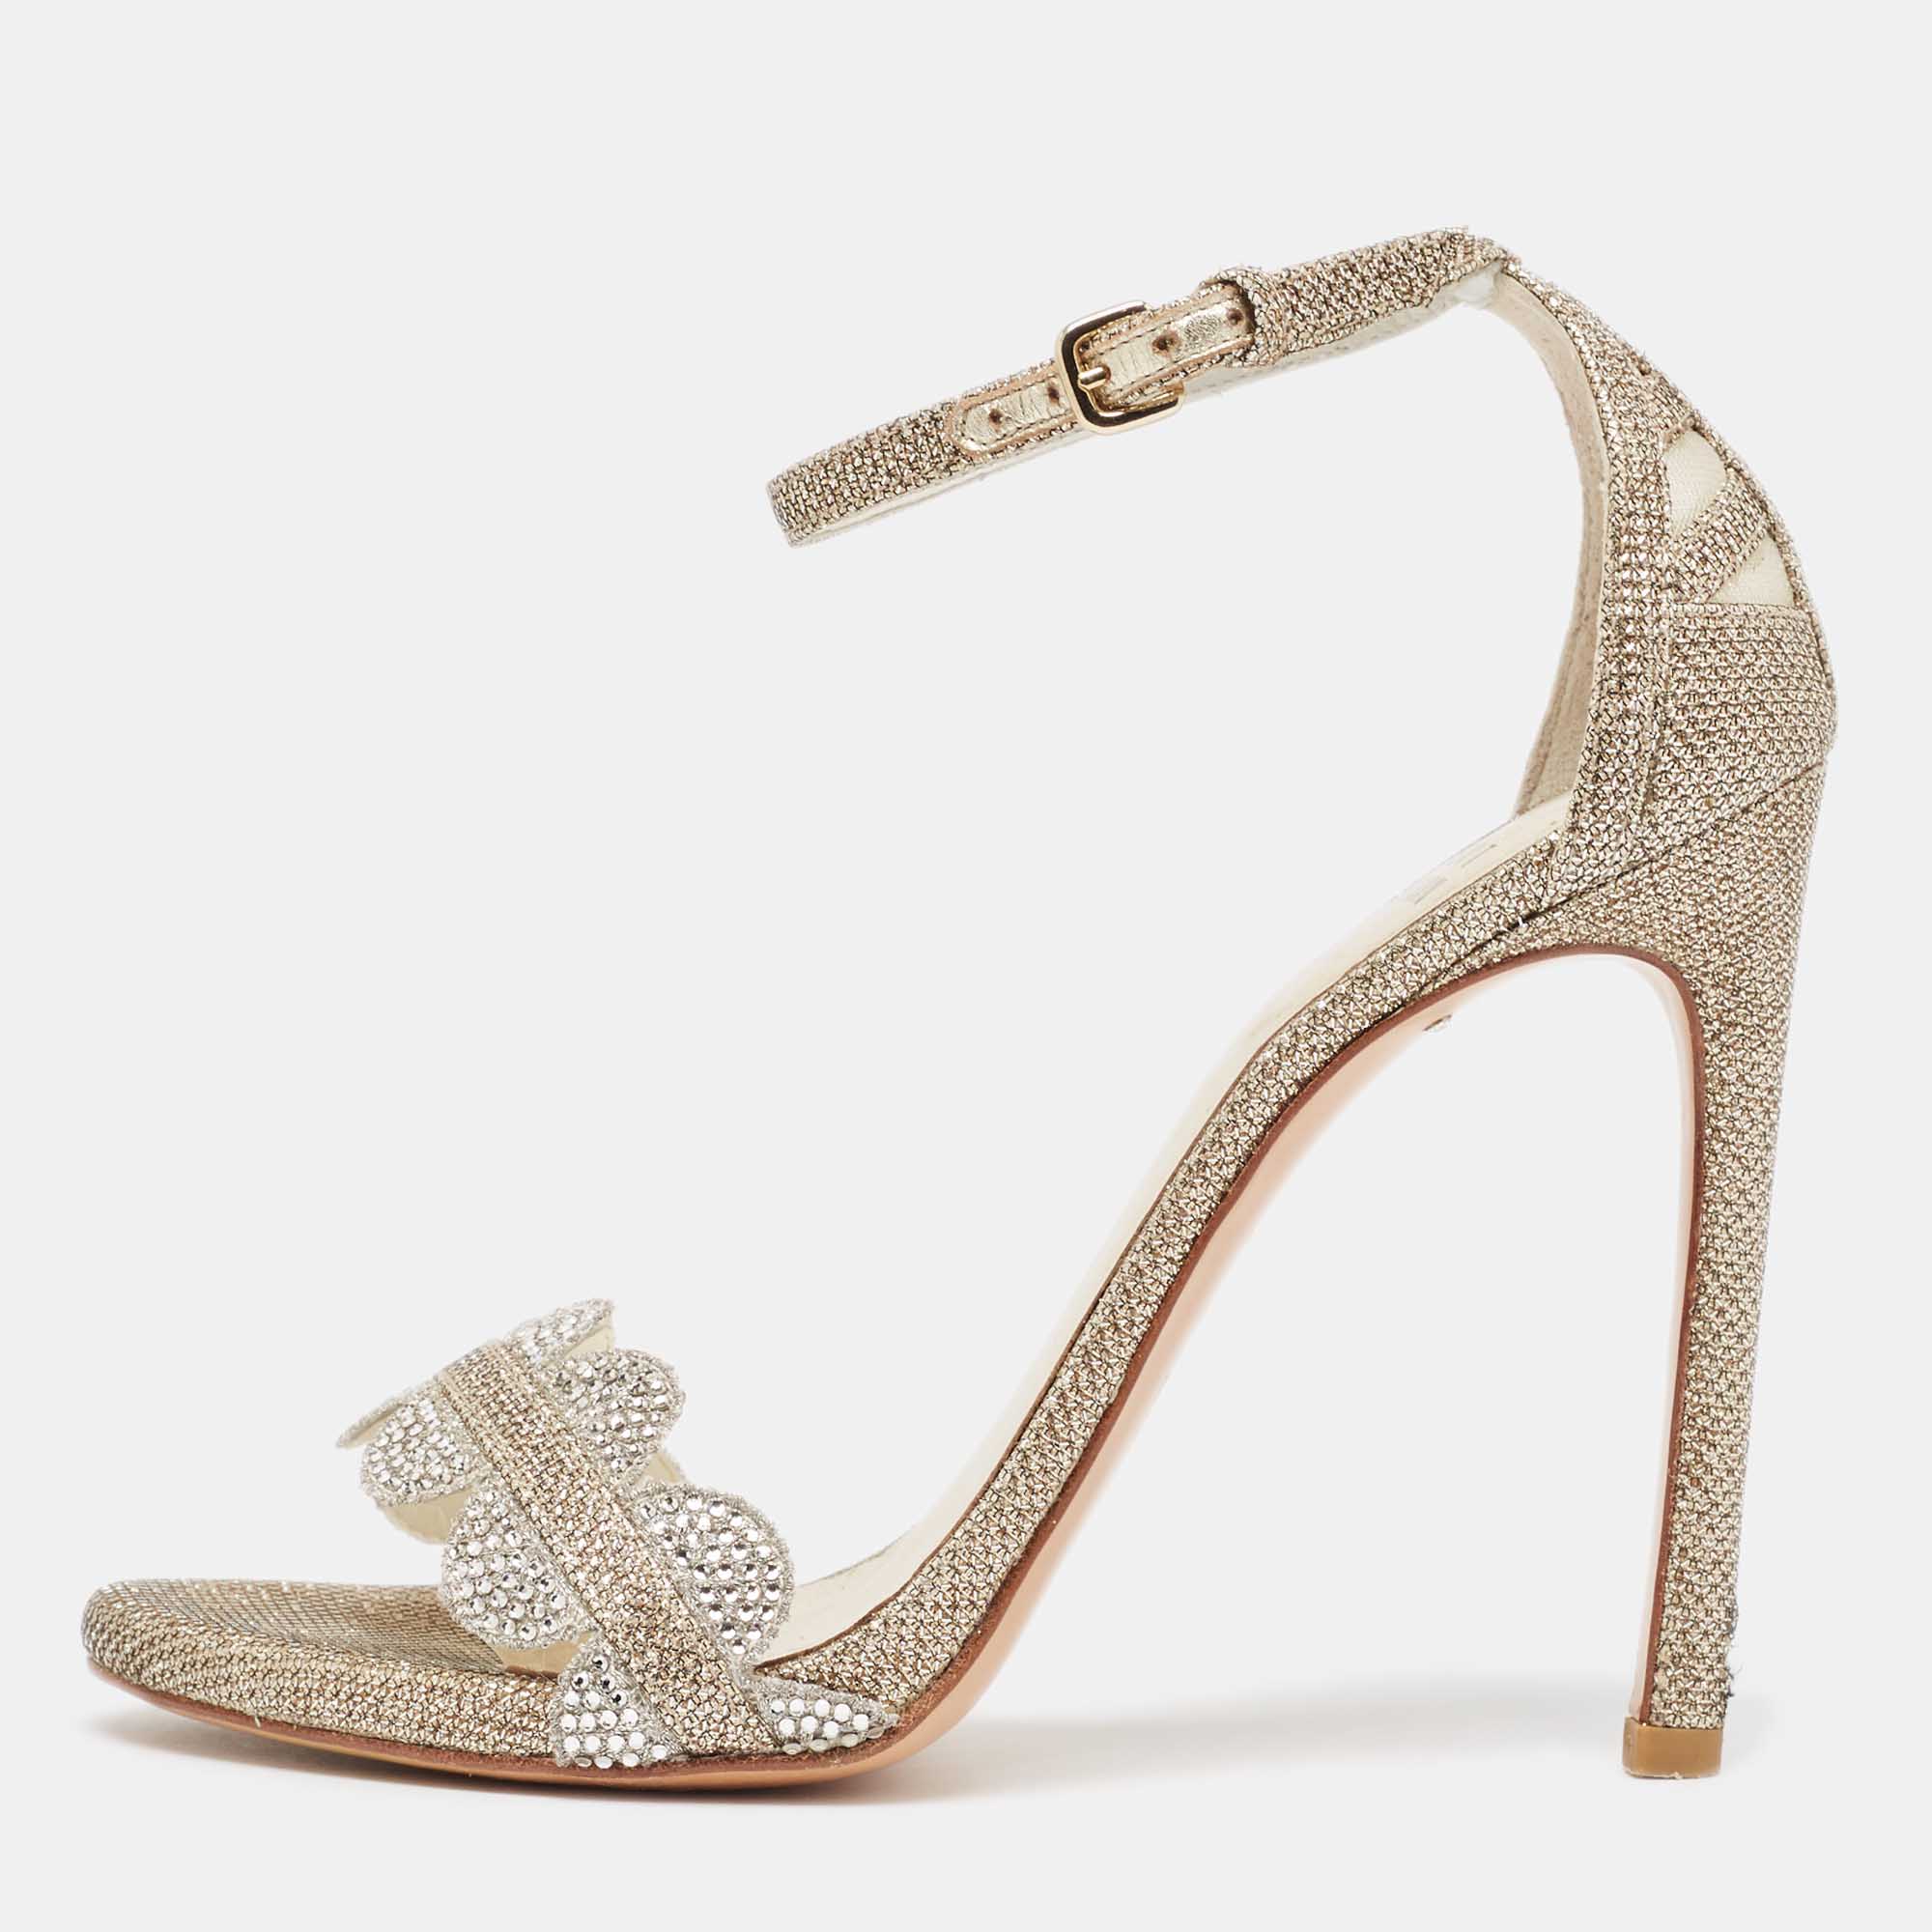 Stuart weitzman metallic gold  glitter ankle strap sandals size 37.5